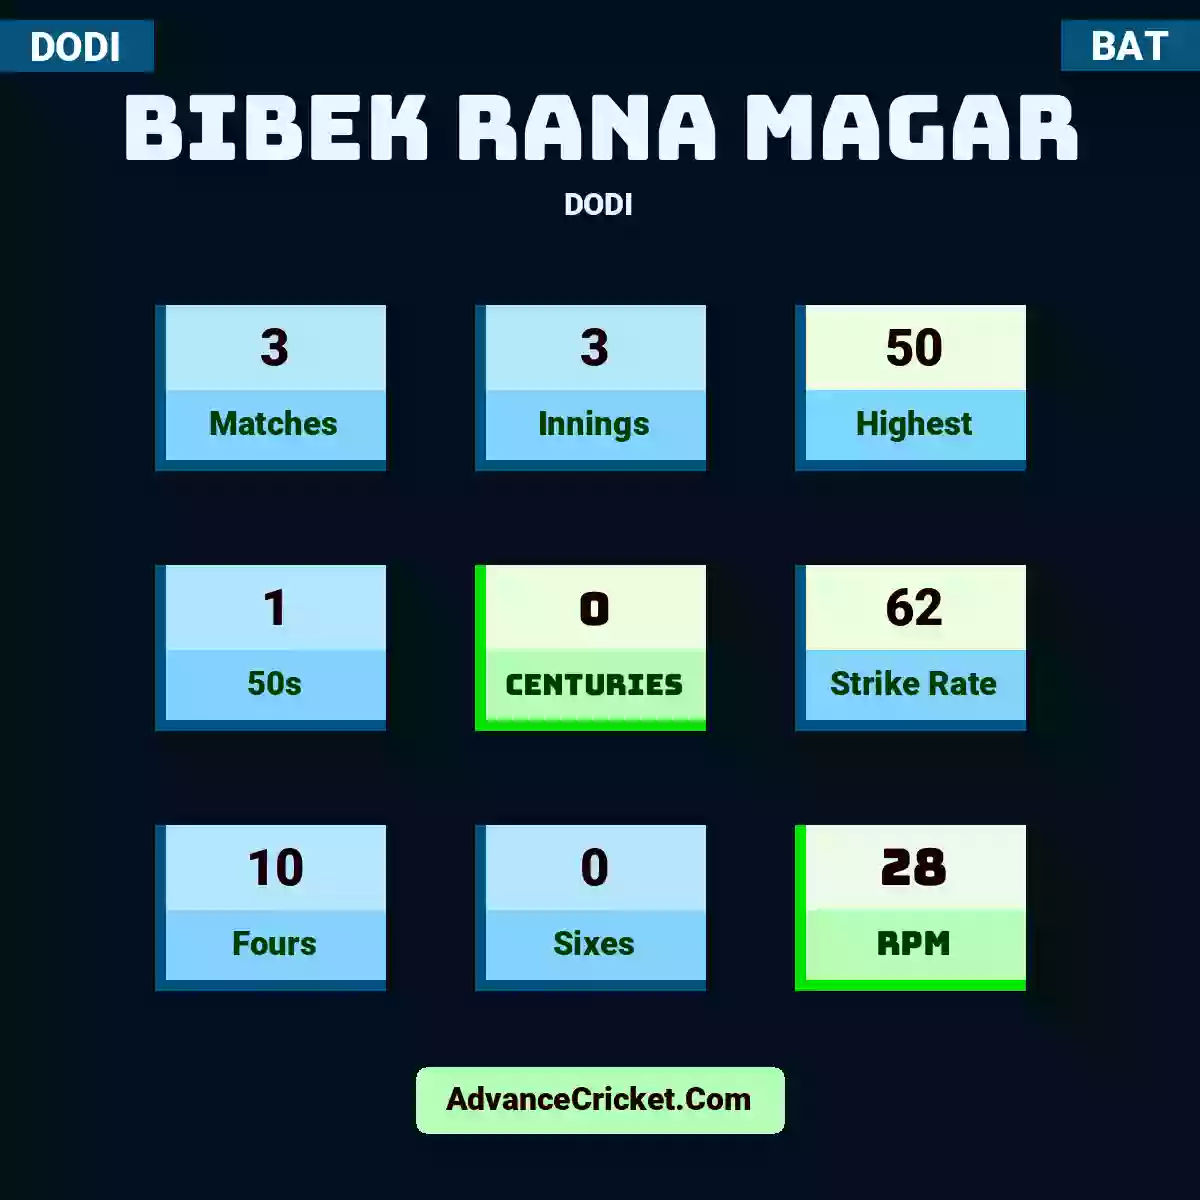 Bibek Rana Magar DODI , Bibek Rana Magar played 3 matches, scored 50 runs as highest, 1 half-centuries, and 0 centuries, with a strike rate of 62. B.Magar hit 10 fours and 0 sixes, with an RPM of 28.